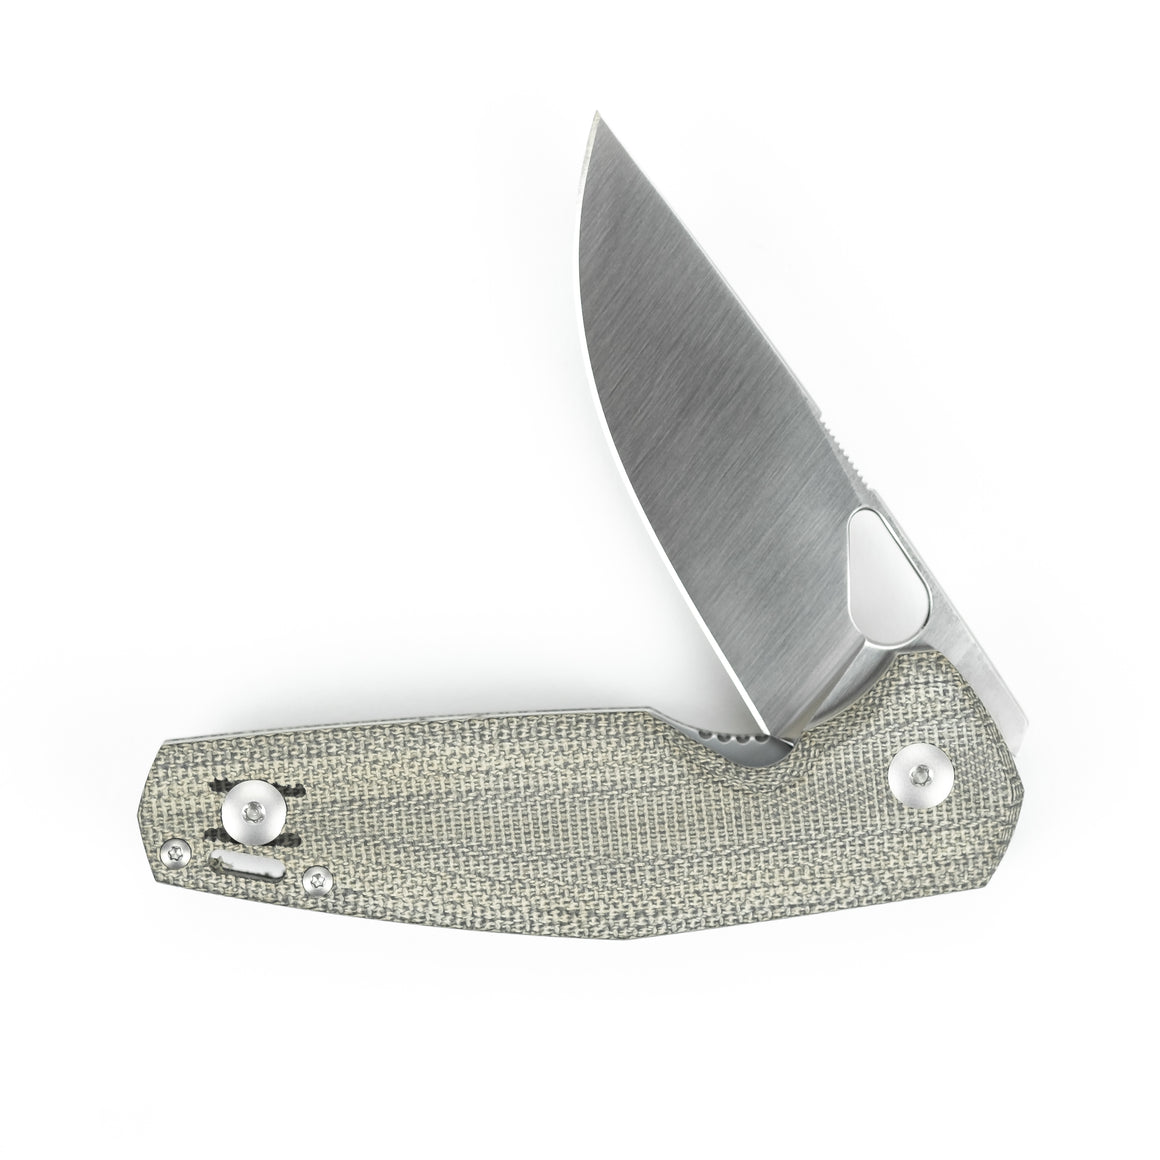 ACE Nimbus V2 - Green Canvas Micarta - EDC knife - Steel: Elmax blade steel - Satin finish